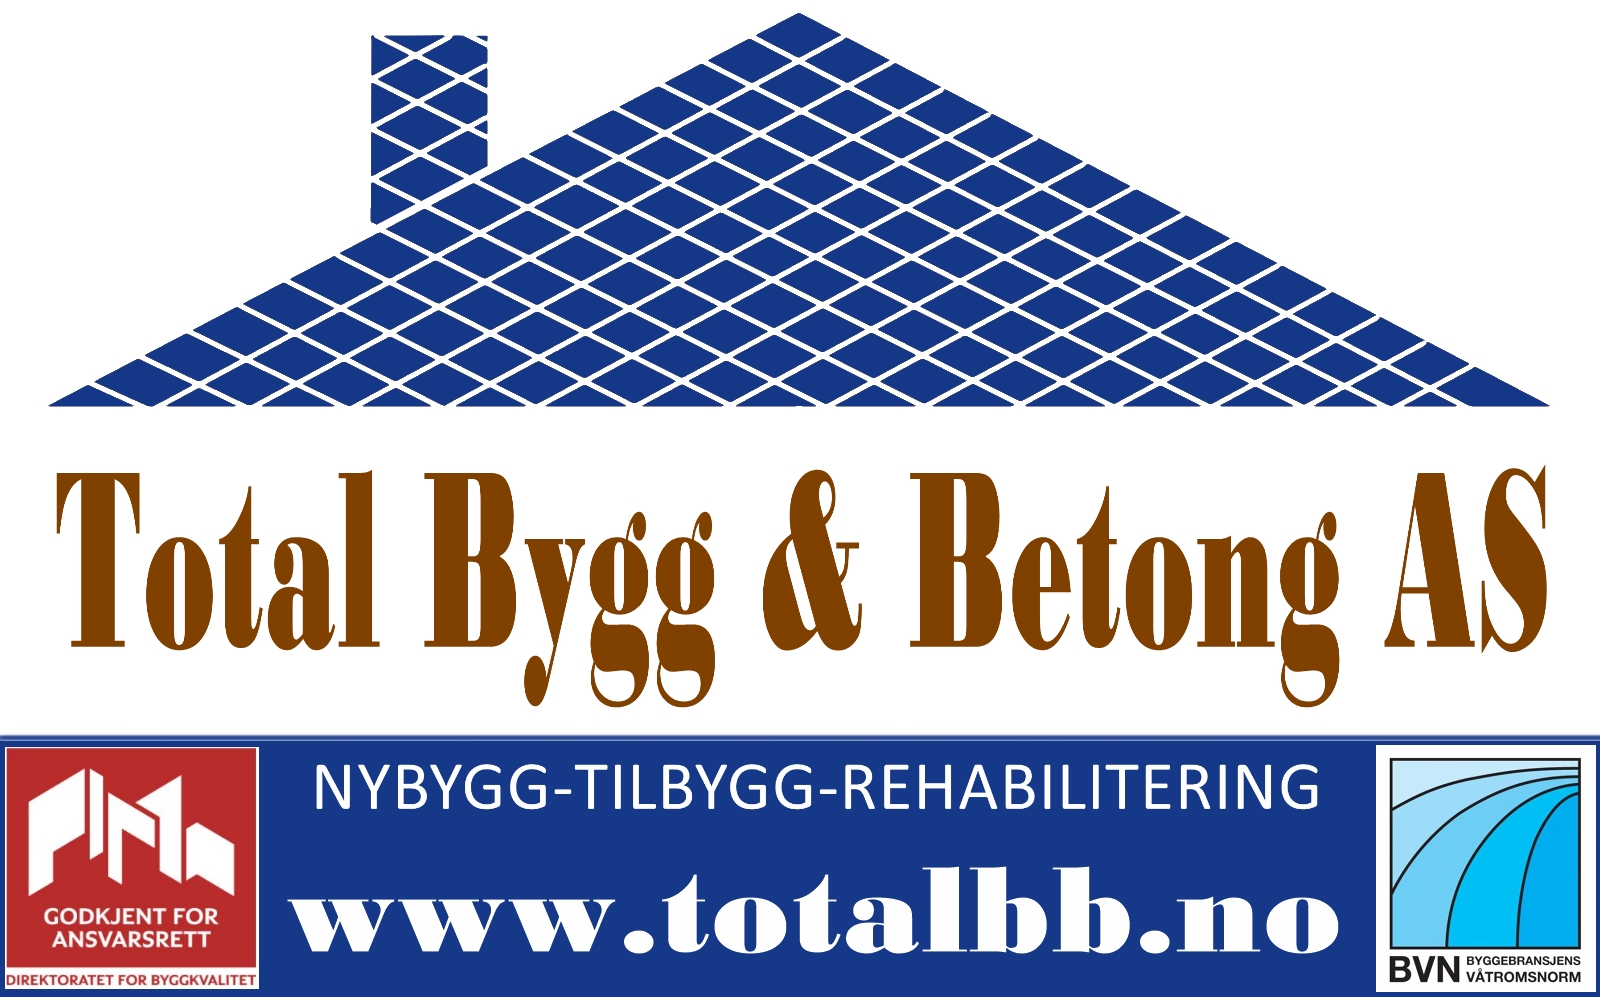 Total Bygg & Betong AS